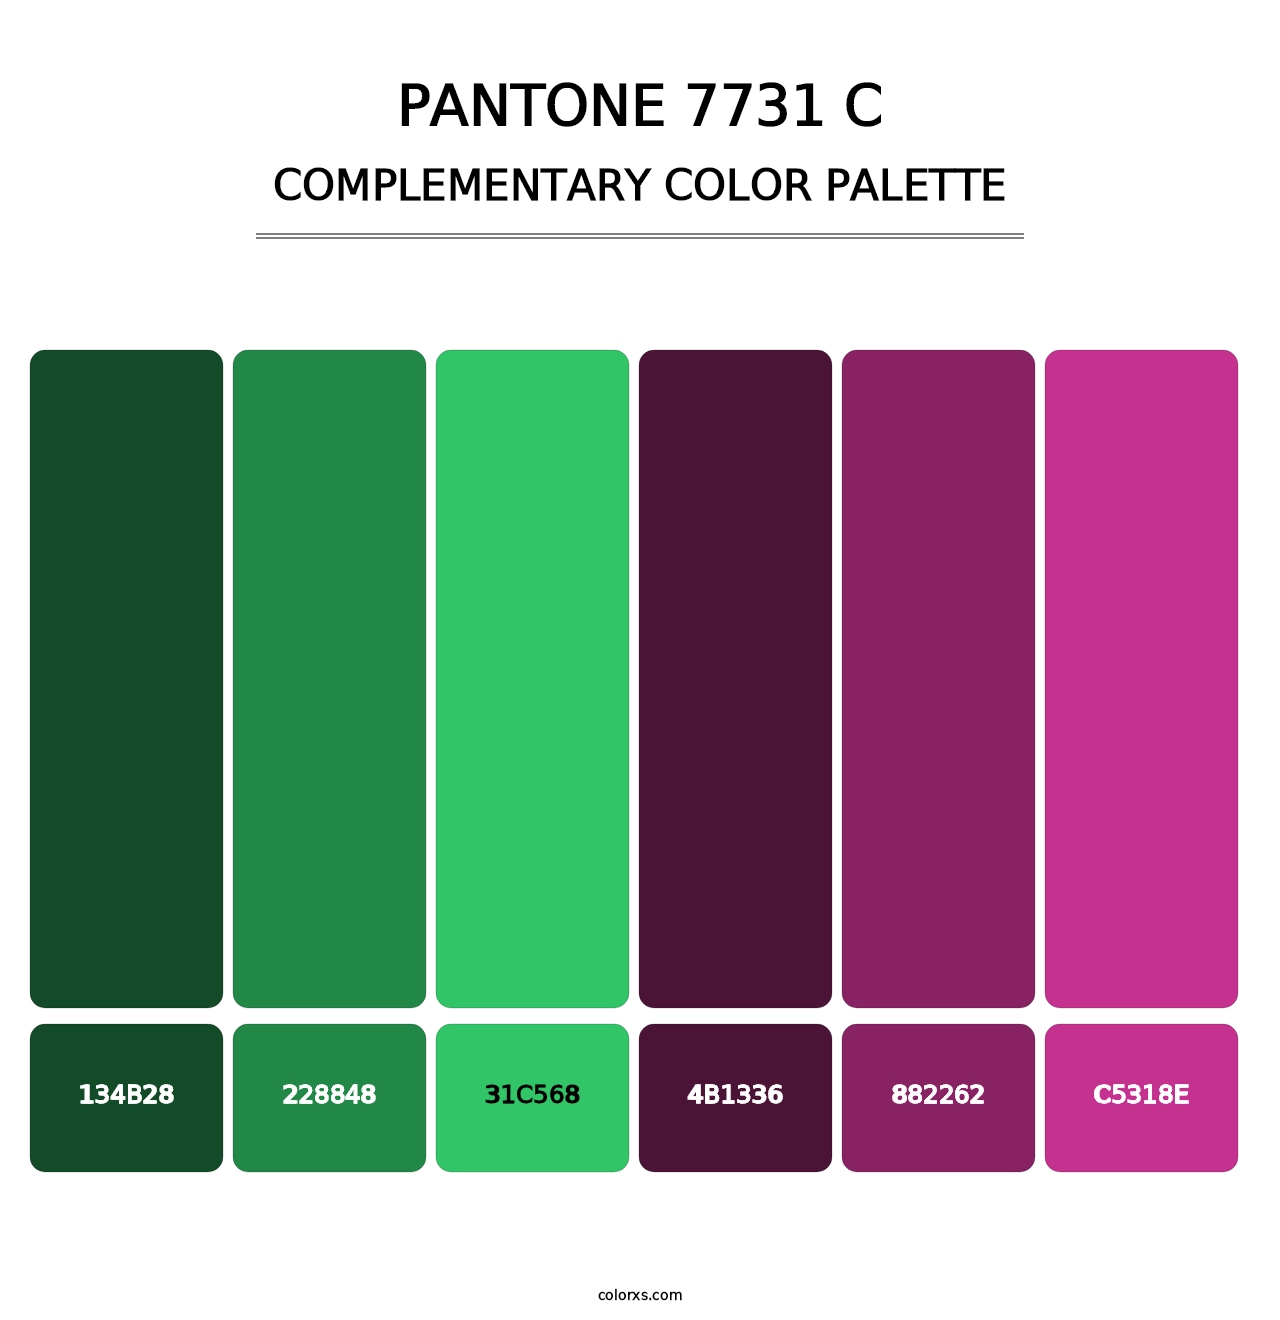 PANTONE 7731 C - Complementary Color Palette